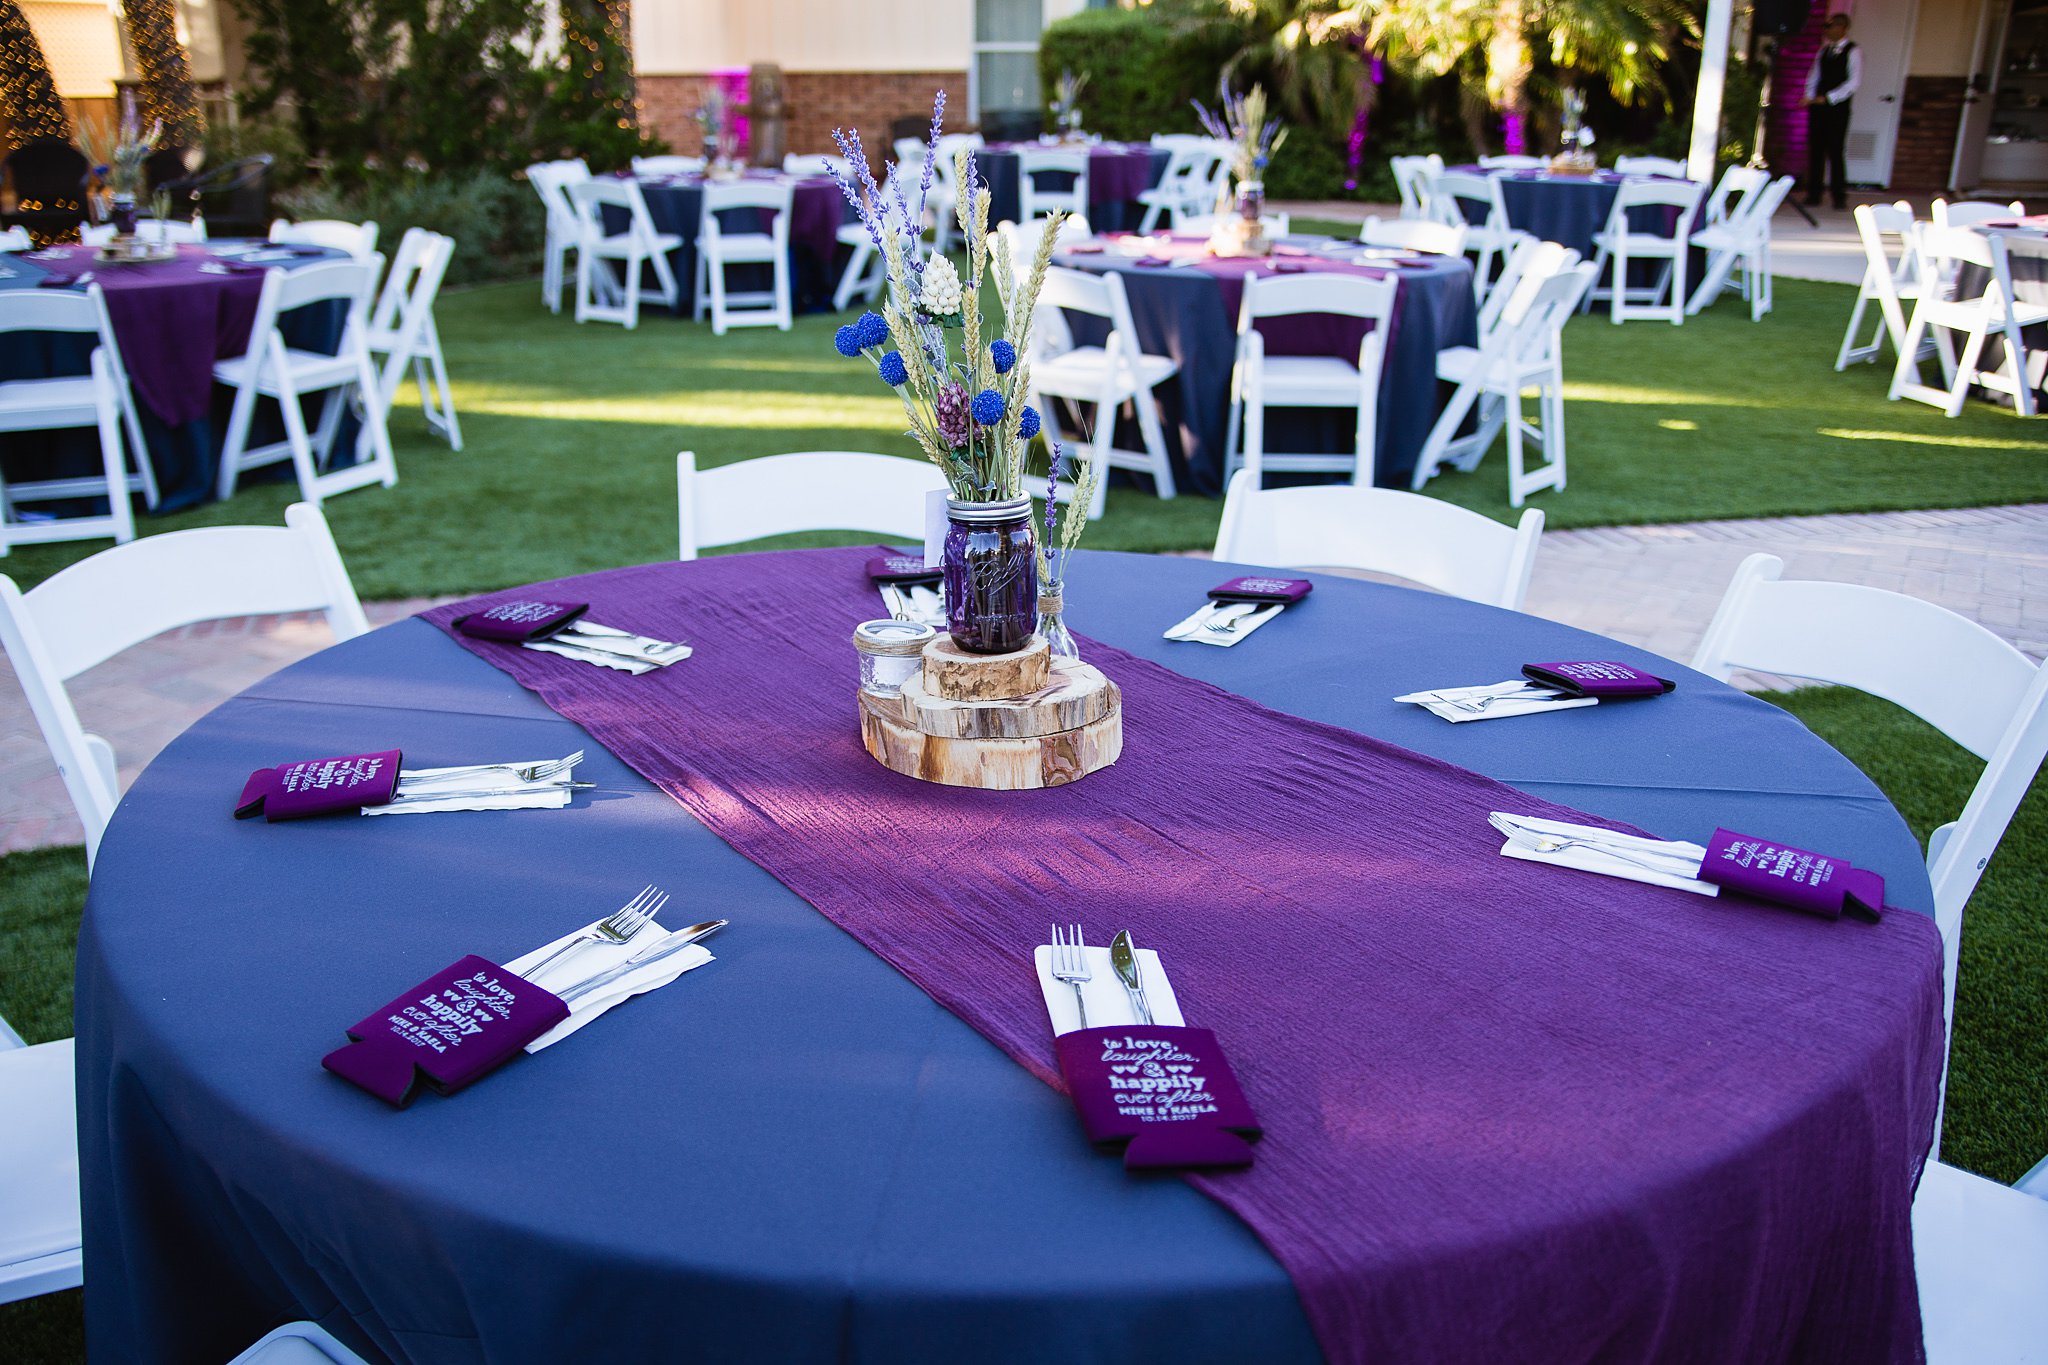 Rustic chic purple wedding reception decorations at Schnepf Farms by Arizona wedding photographer PMA Photography.